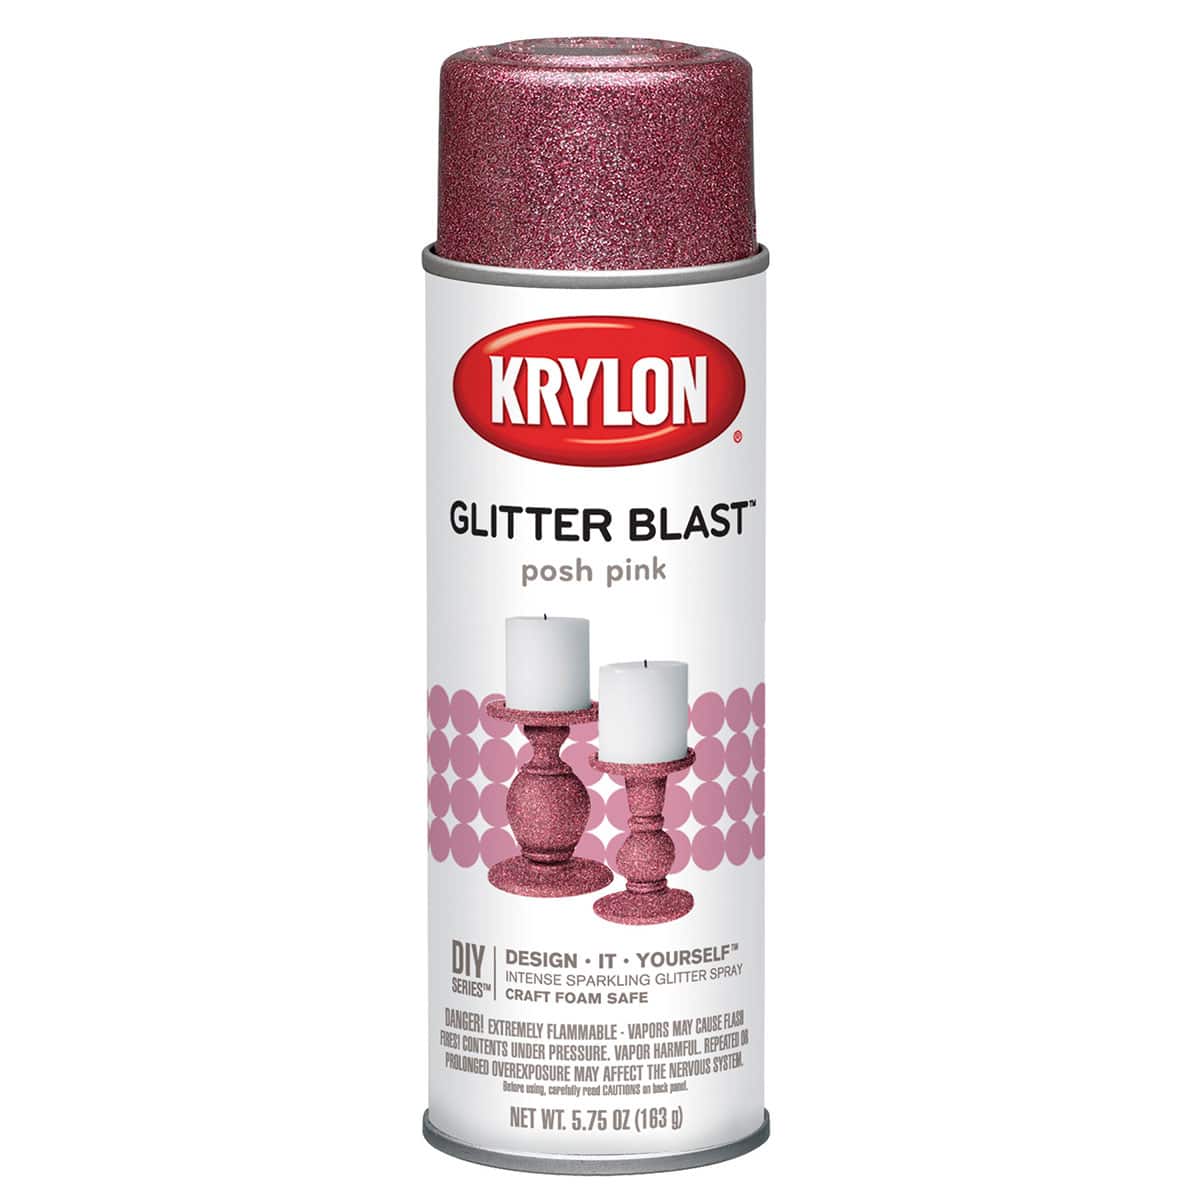  Krylon K03804A00 Glitter Blast Glitter Spray Paint for Craft  Projects, Diamond Dust, 5.75 oz : Arts, Crafts & Sewing